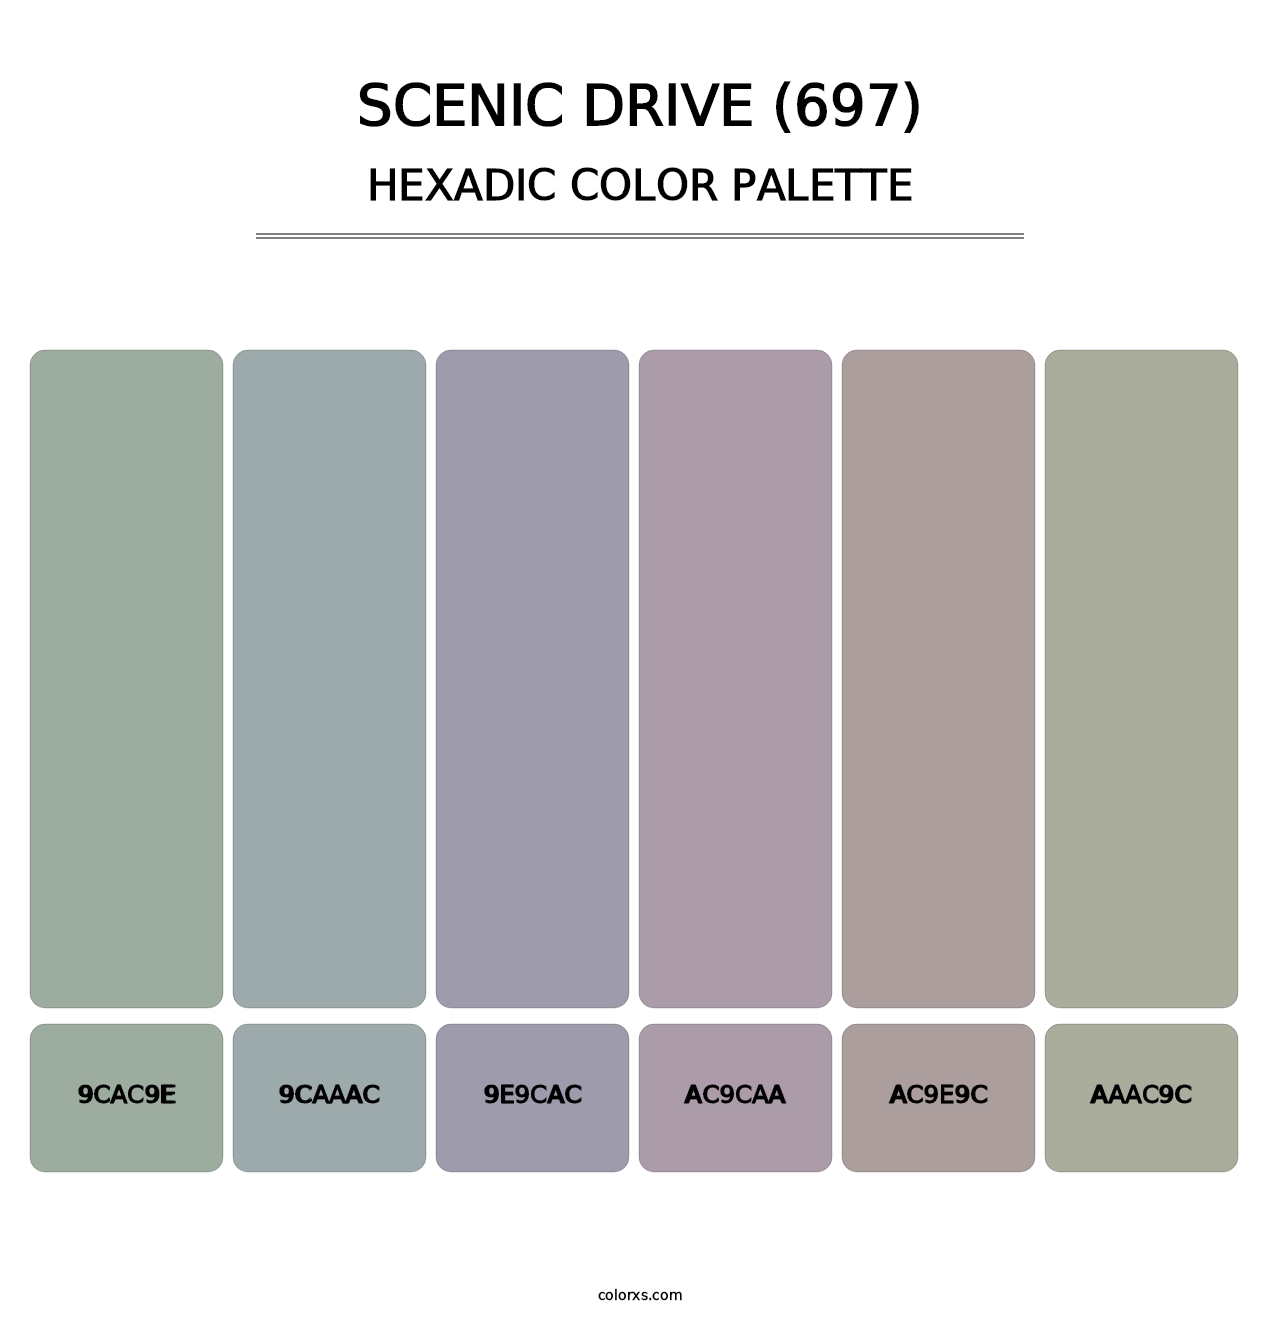 Scenic Drive (697) - Hexadic Color Palette